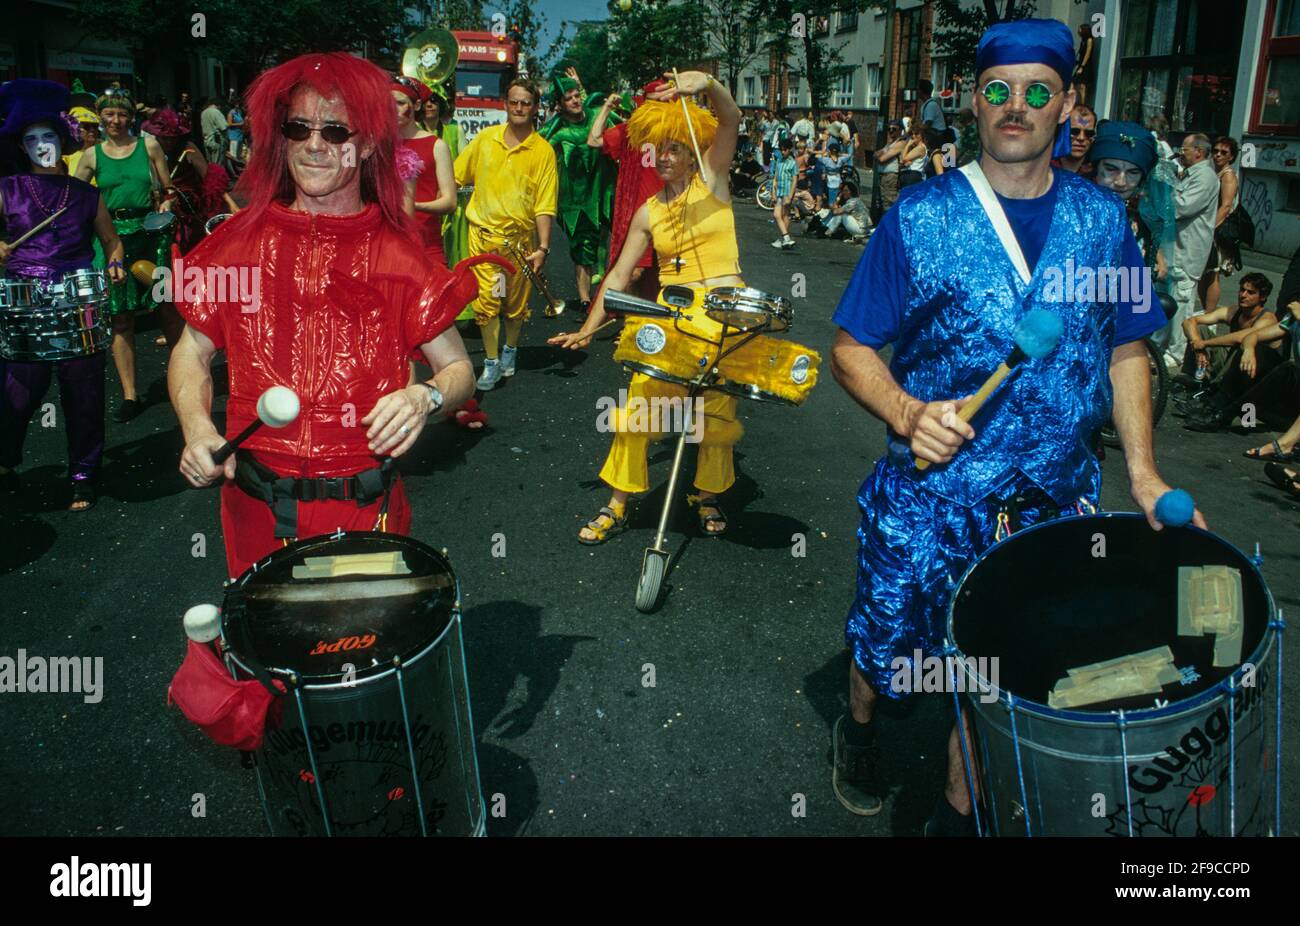 Teilnehmer einer bunten Trommler-Gruppe beim Karneval der Kulturen in Berlin im Jahr 2000 - members of a colourful drum-band at the Carnival of Cultures of Berlin in the year 2000. Stock Photo